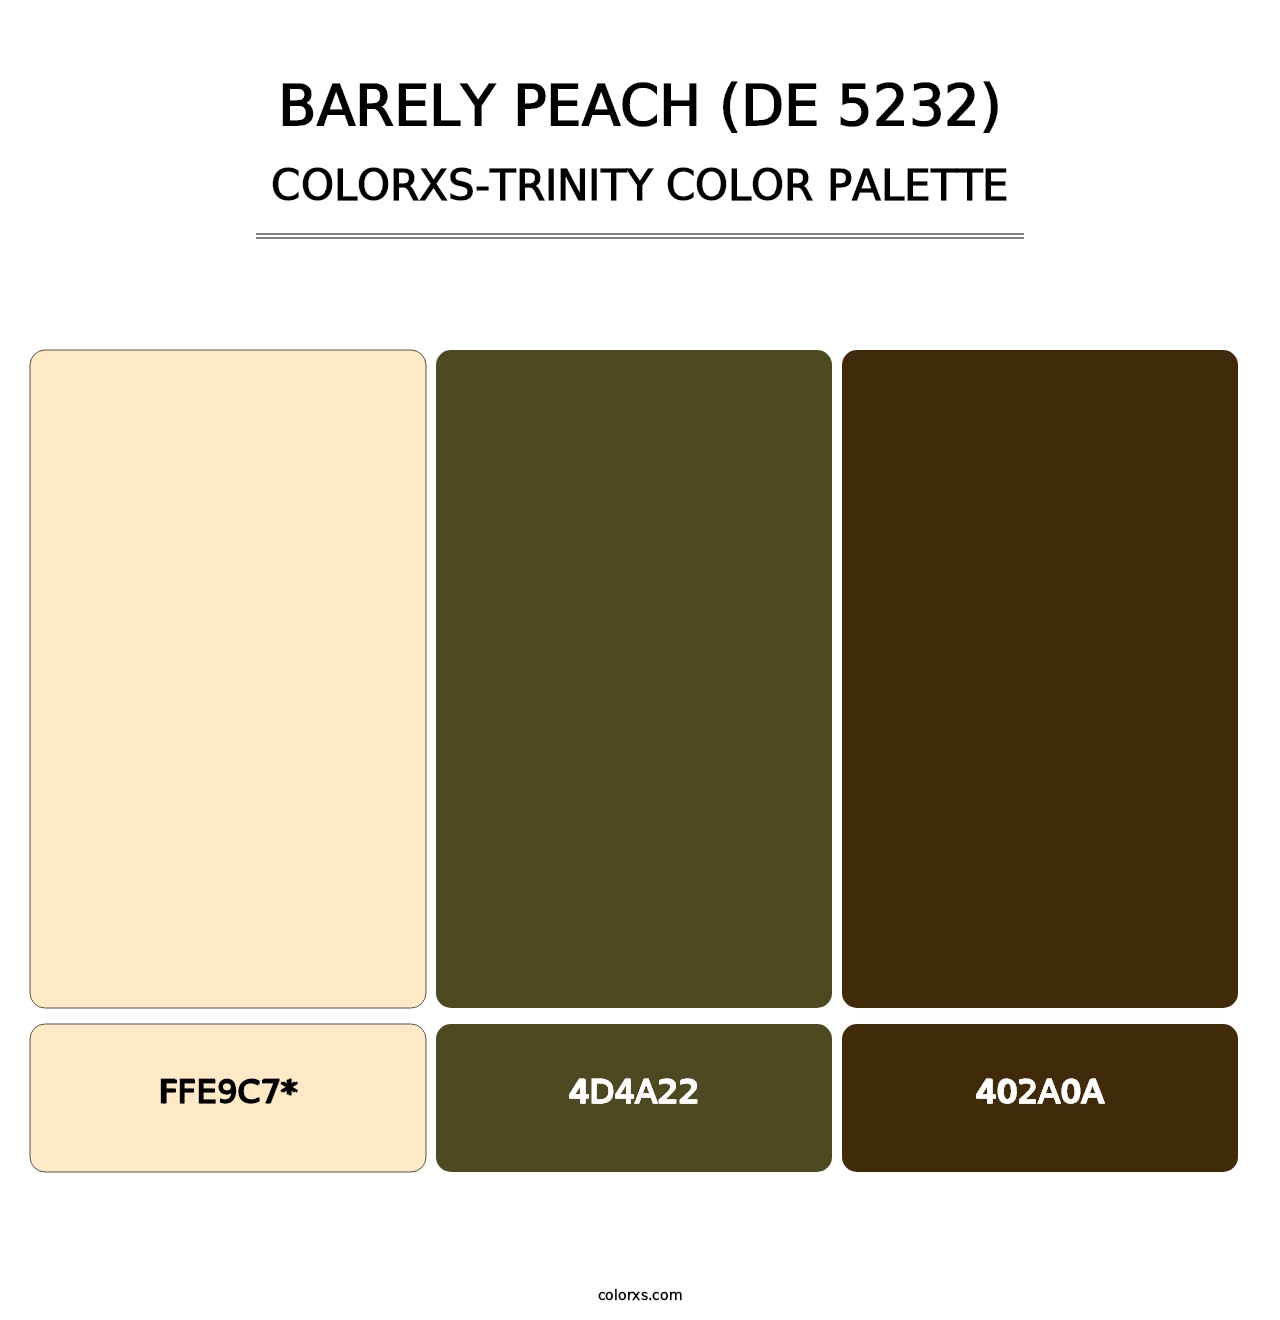 Barely Peach (DE 5232) - Colorxs Trinity Palette